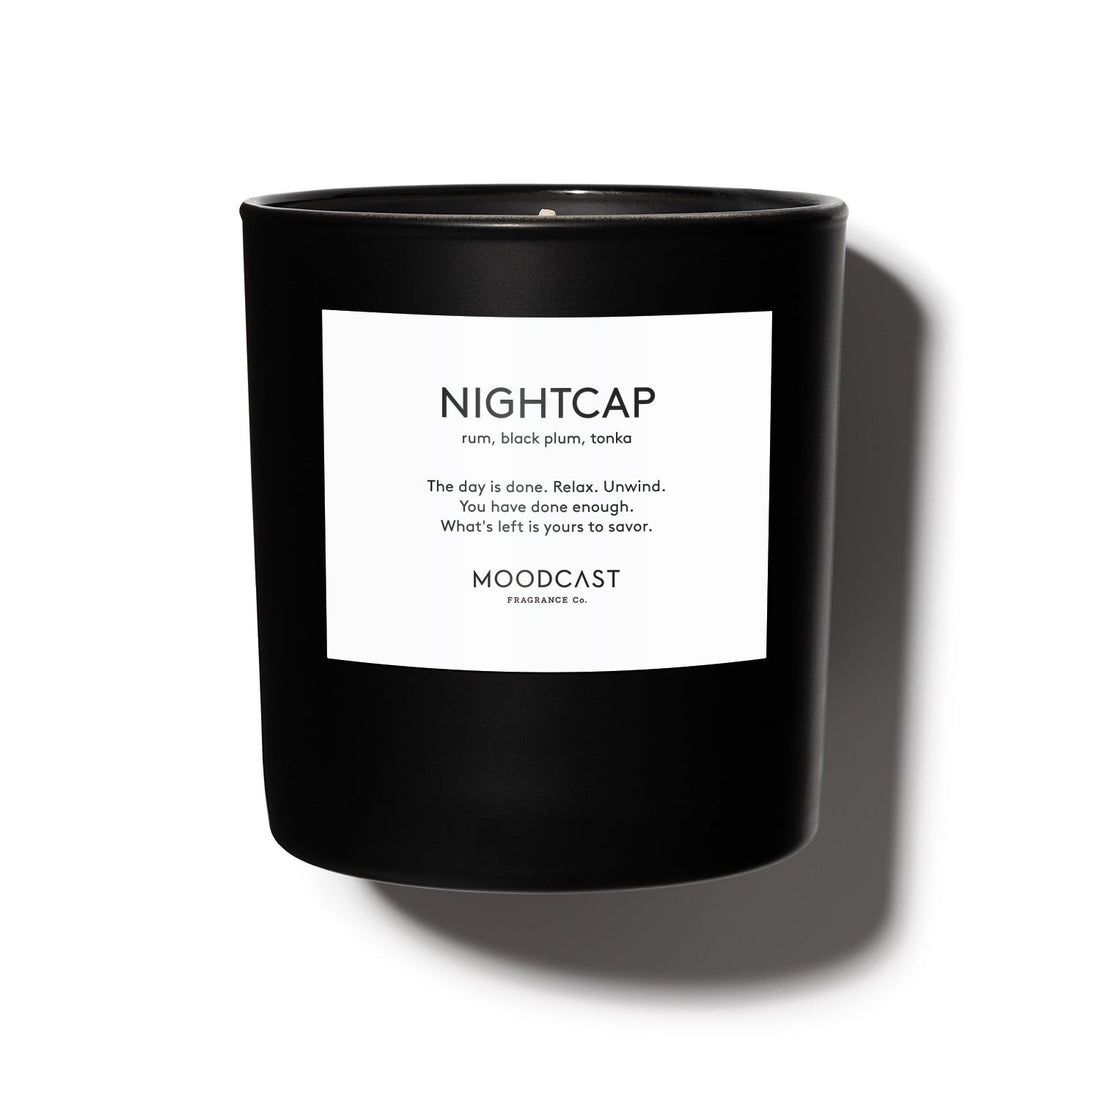 Nightcap - Night & Day Collection (Black & White) - 8oz/227g Coconut Wax Blend Glass Jar Candle - Key Notes: Rum, Black Plum, Tonka